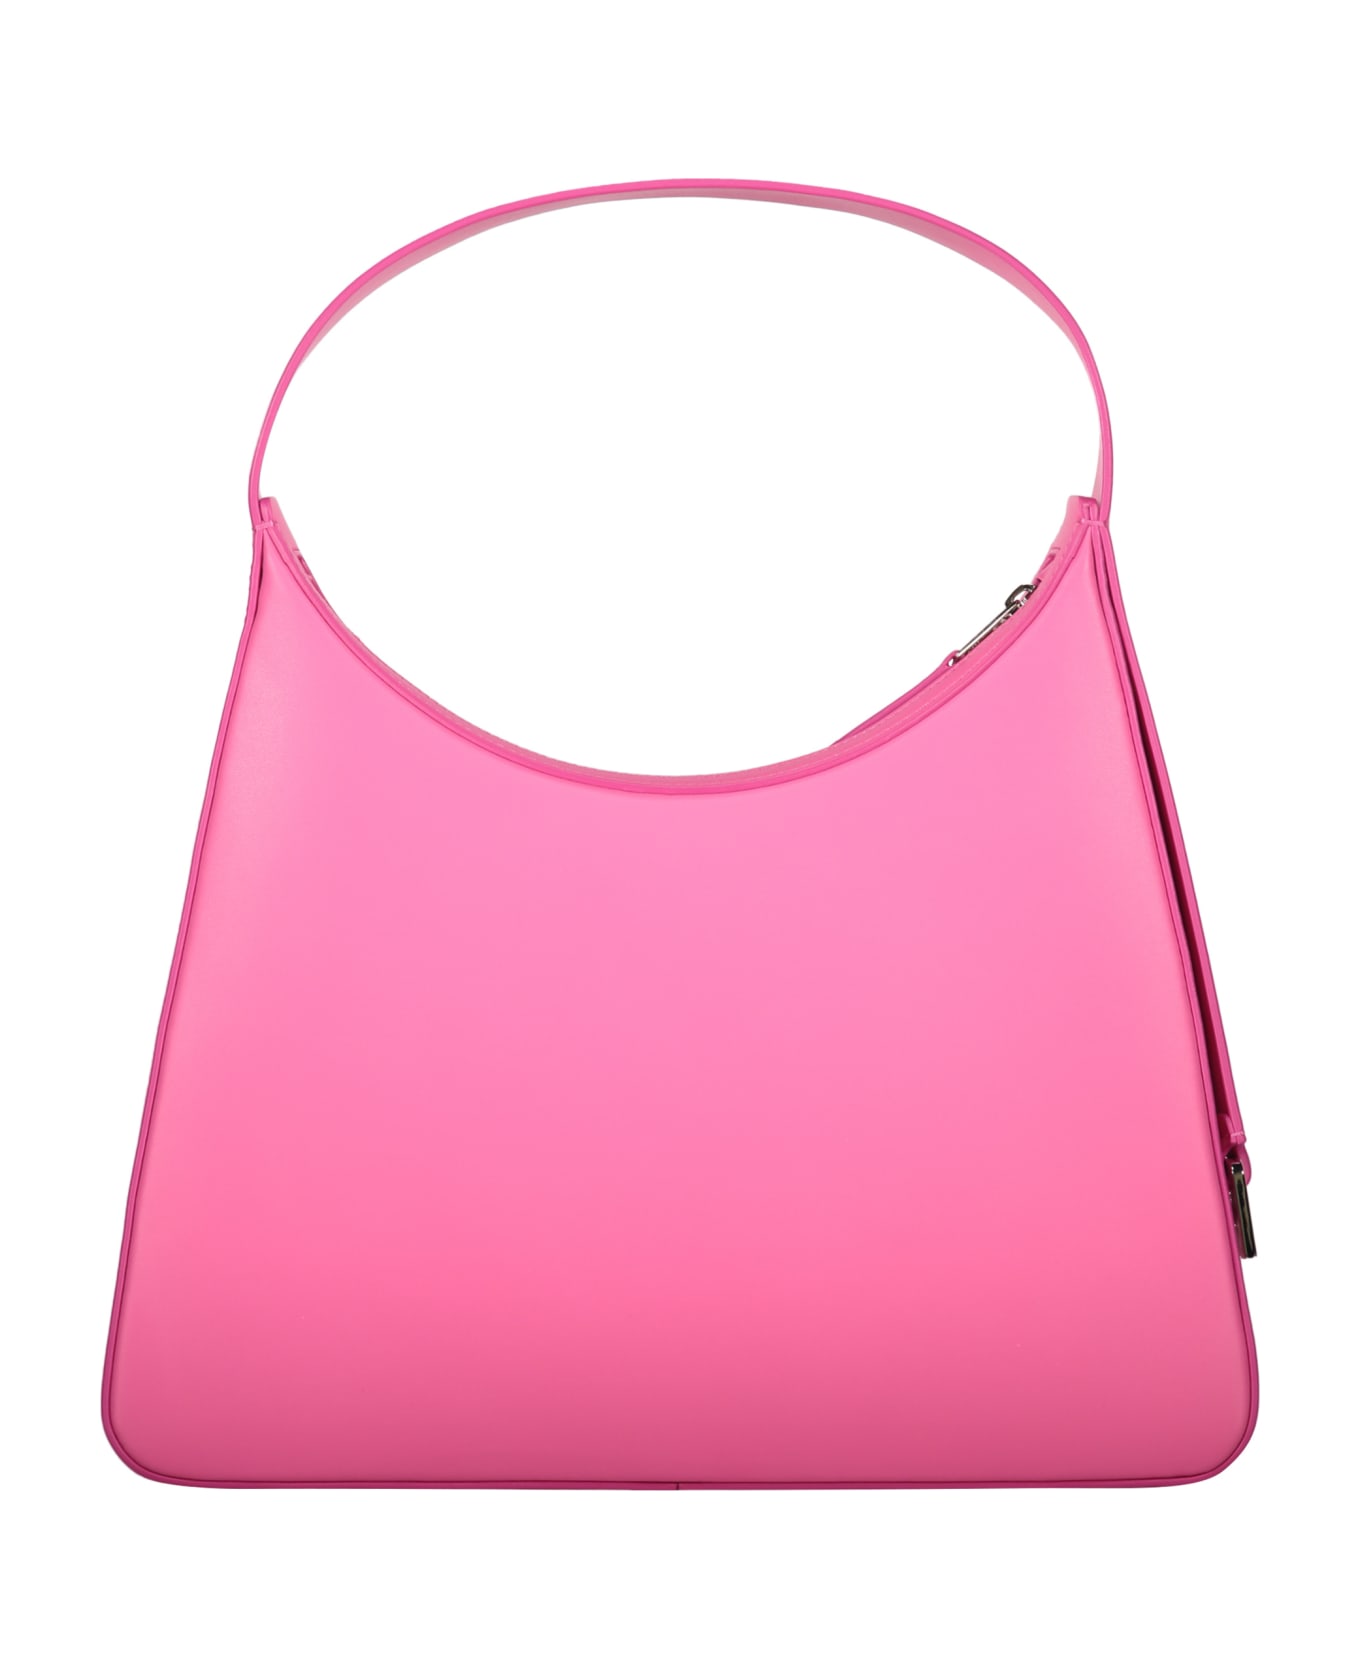 AMBUSH Leather Handbag - Pink トートバッグ